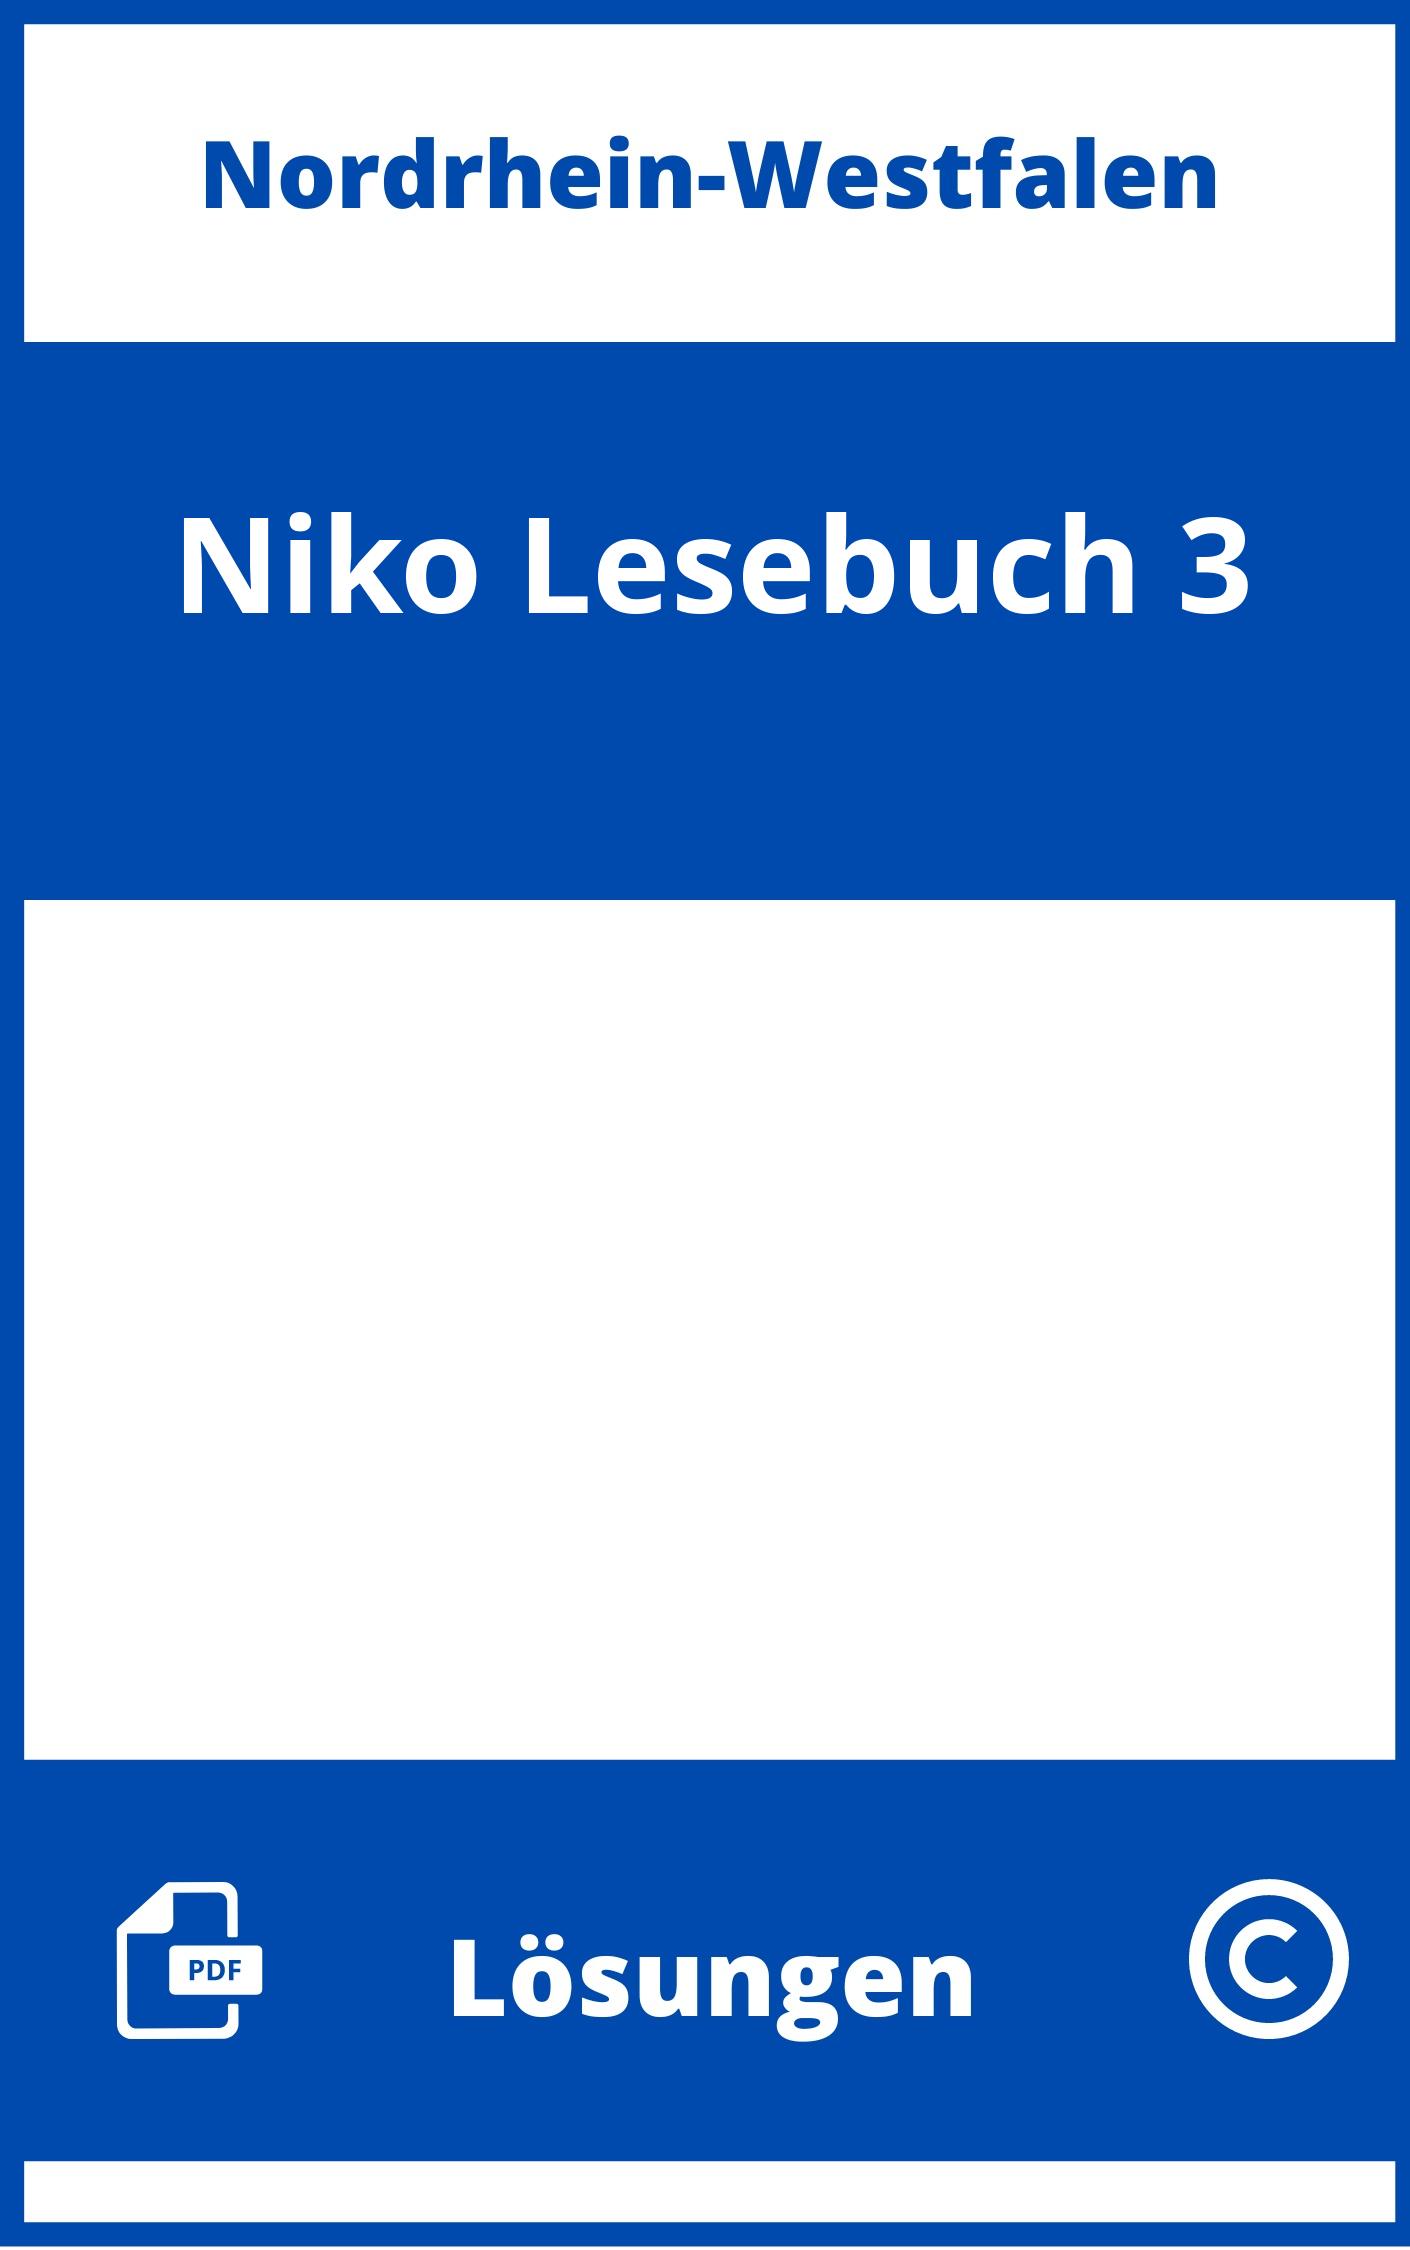 Niko Lesebuch 3 Lösungen NRW PDF